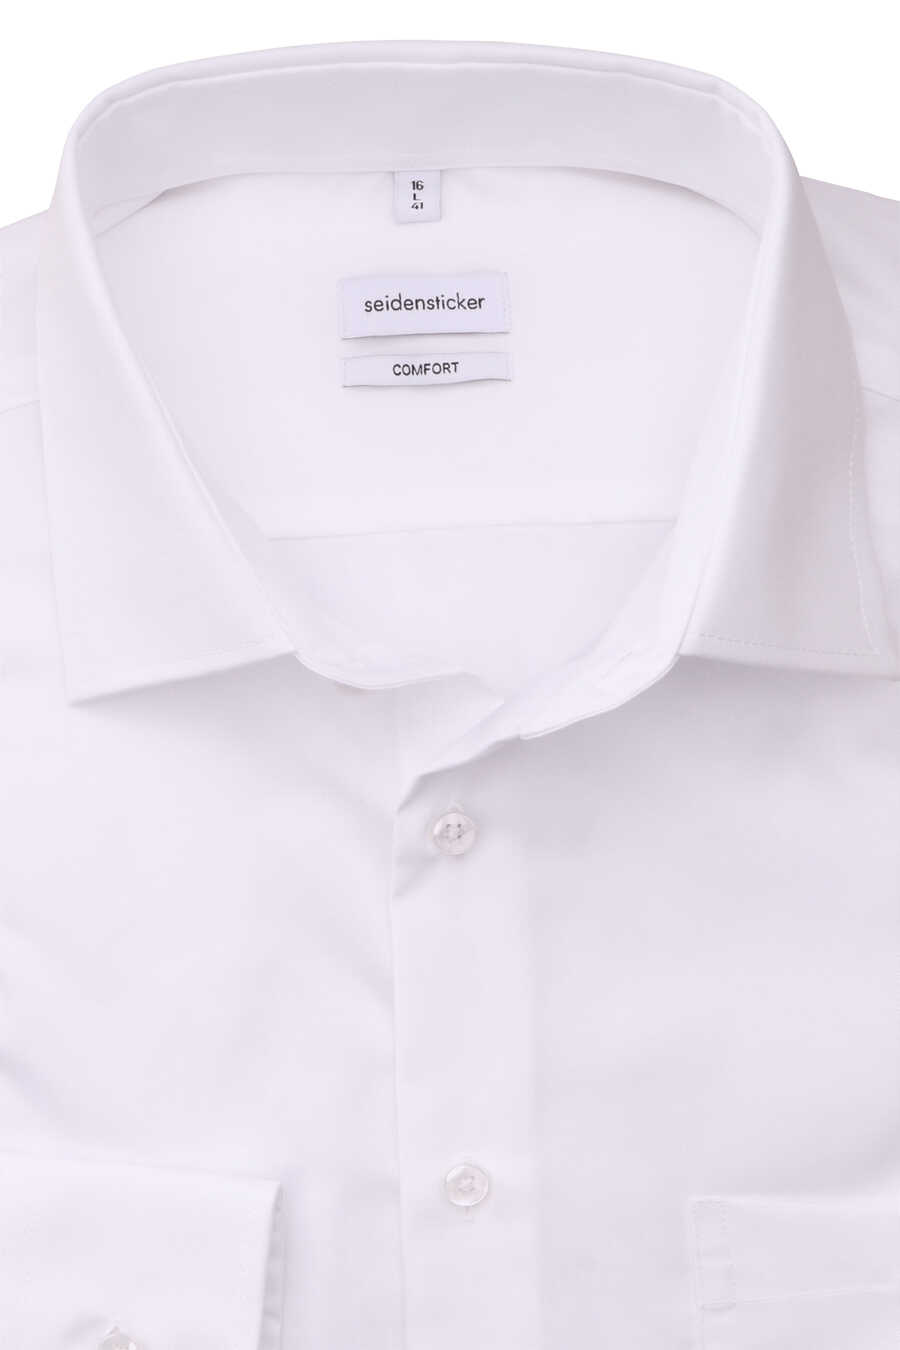 SEIDENSTICKER weiß Kent New Langarm Comfort Kragen Hemd